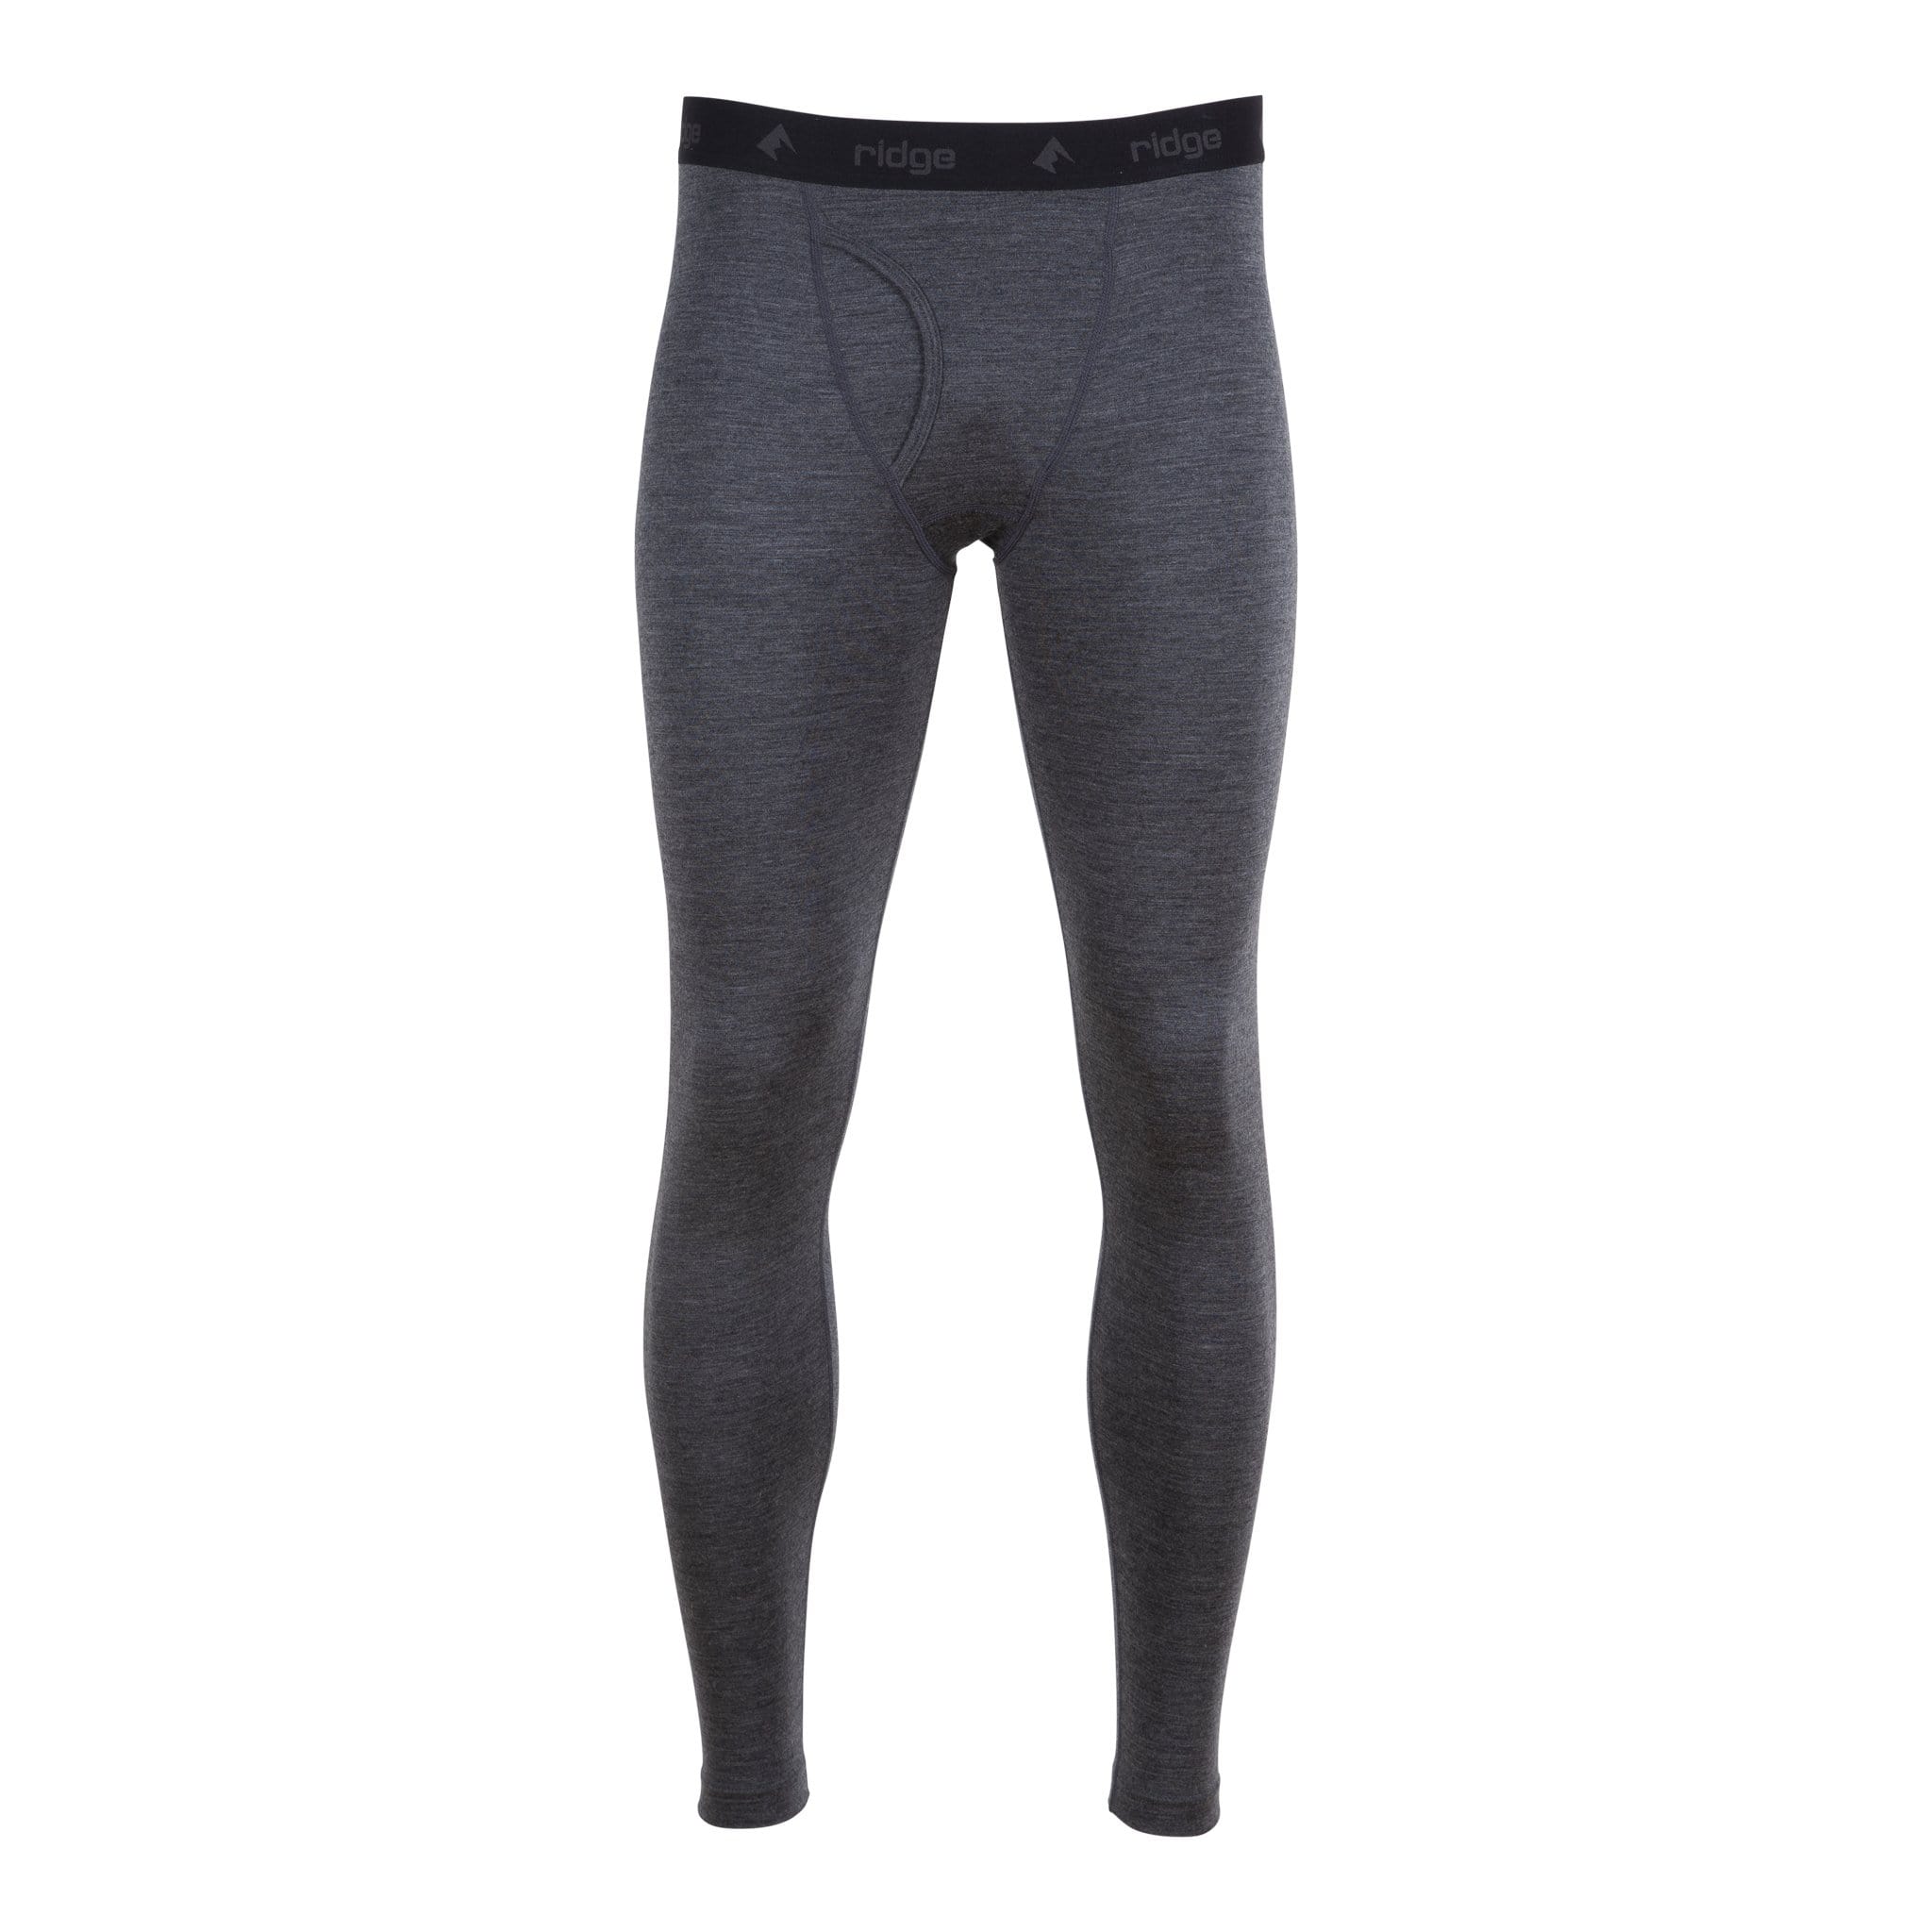 Grey Merino Wool Pants - Heavyweight Base Layer